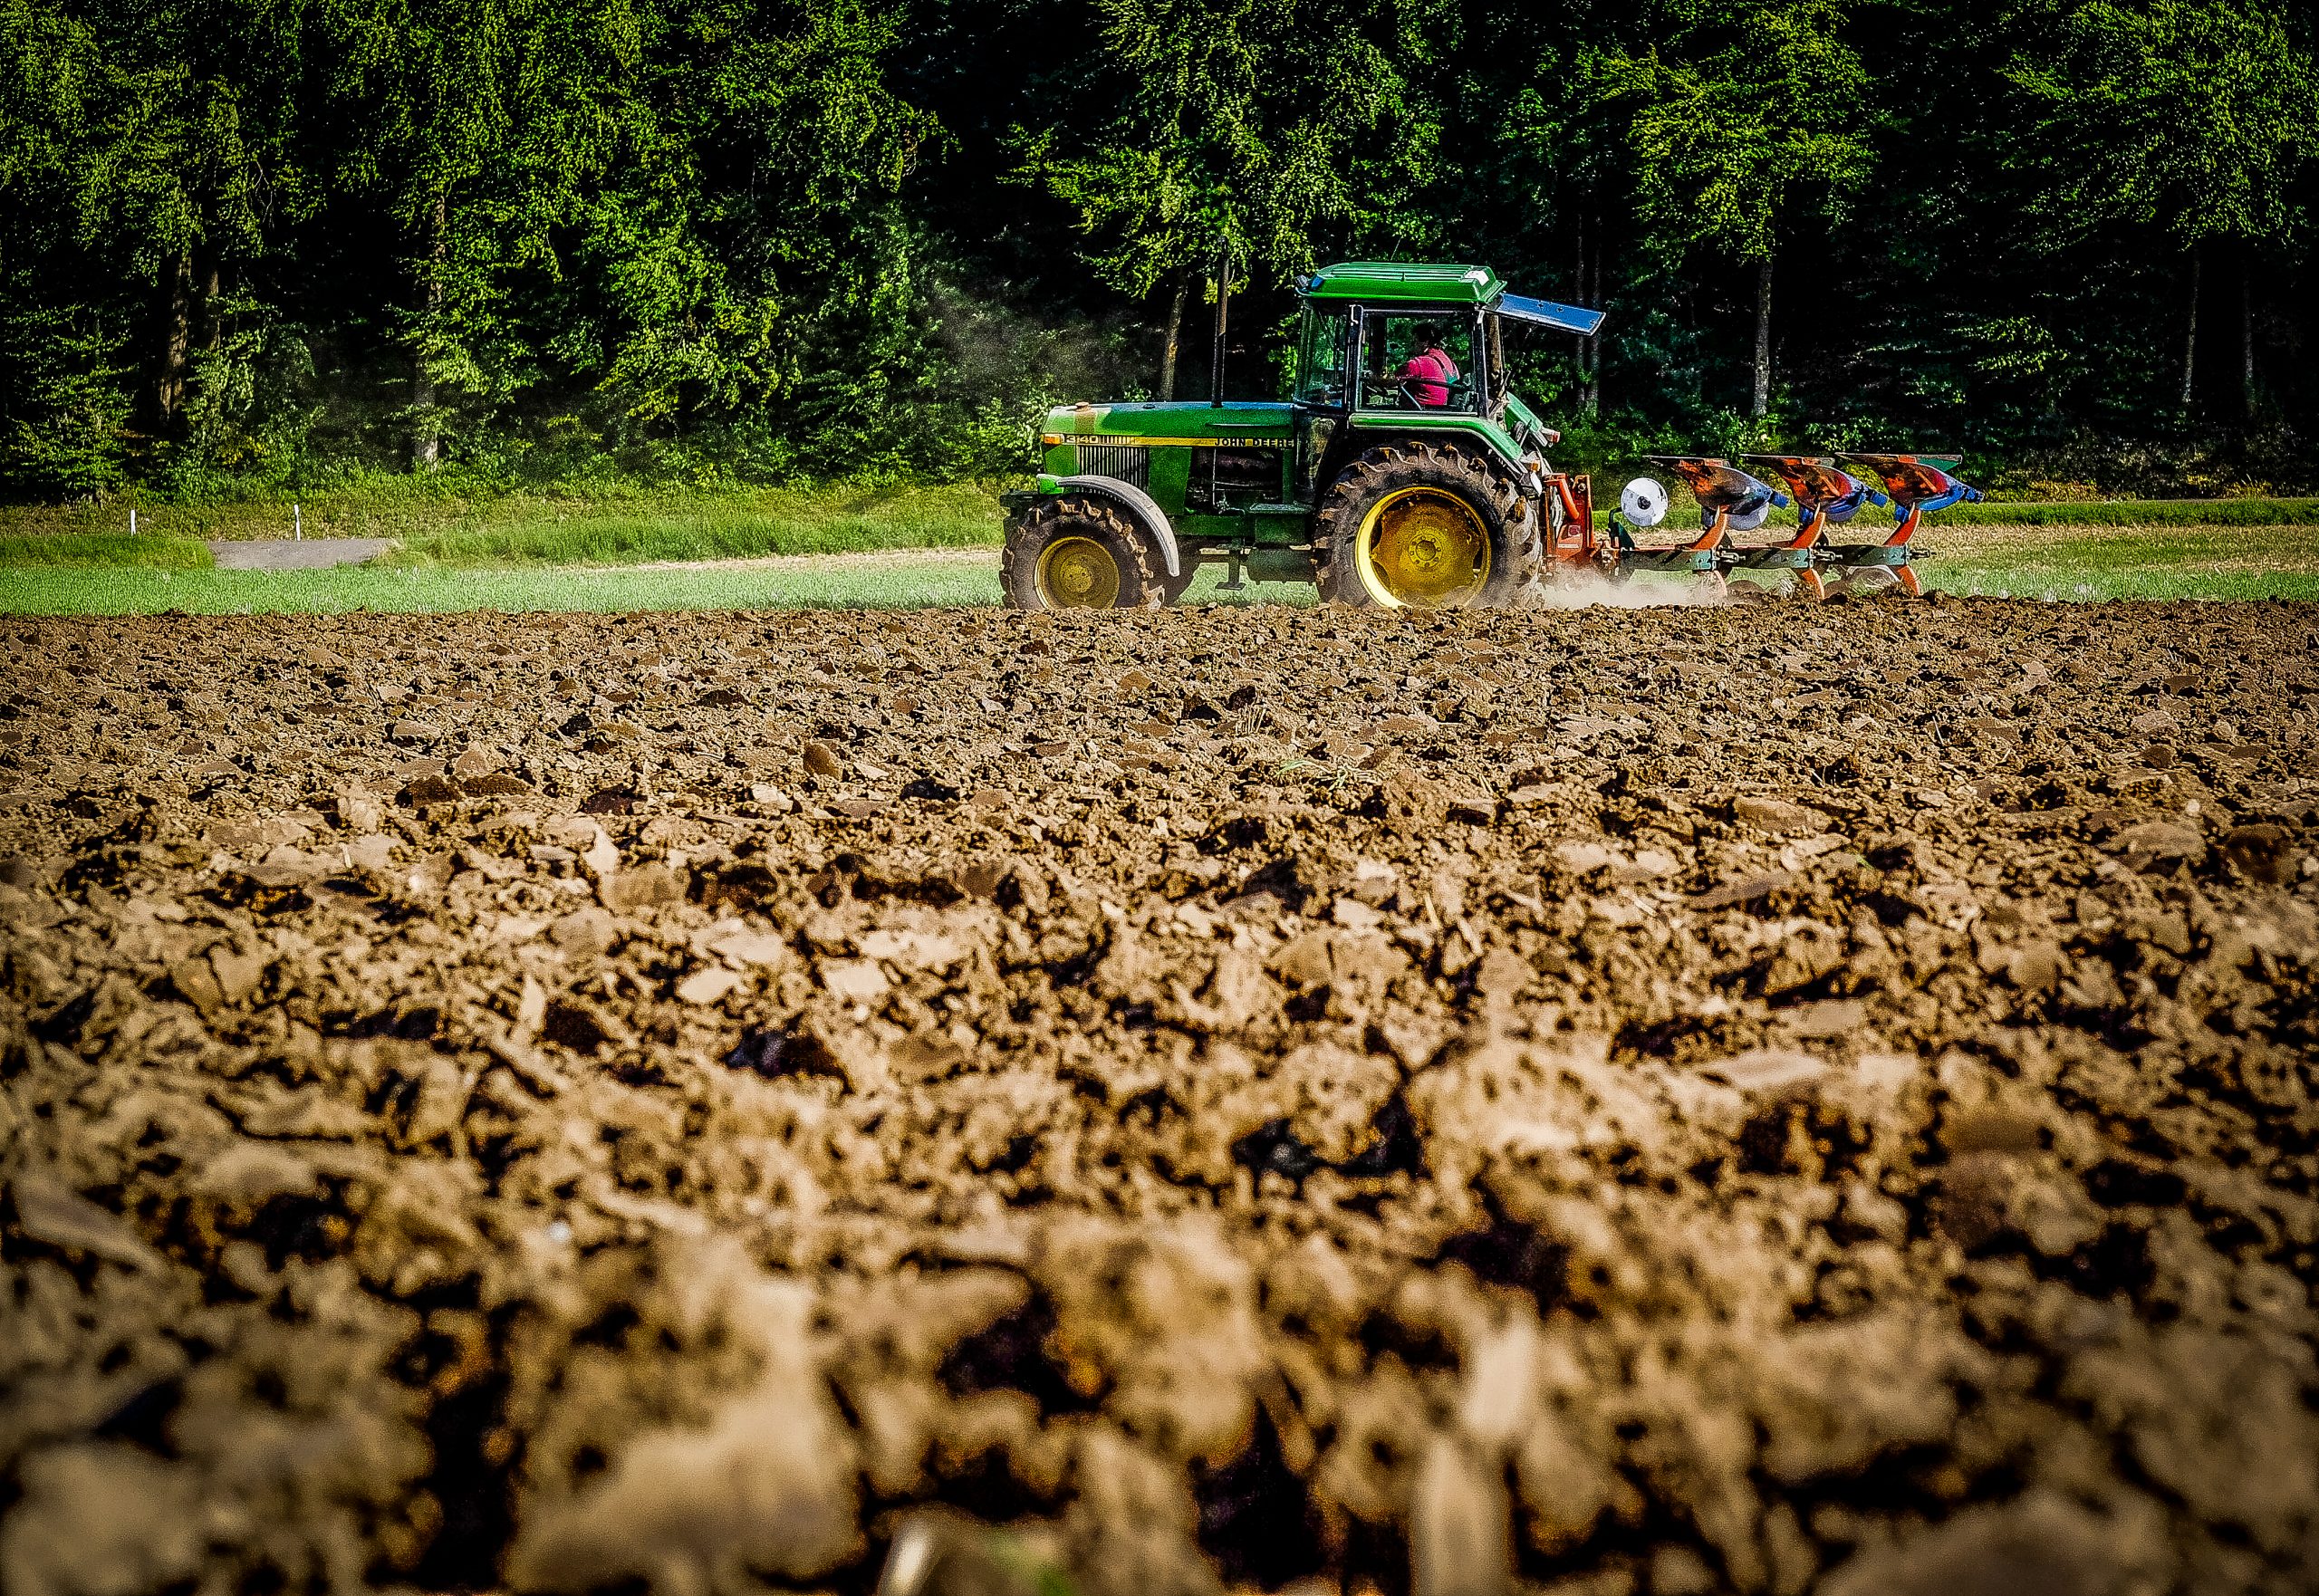 field-food-farming-vehicle-crop-soil. Copyright: Matthias Ripp/pxhere